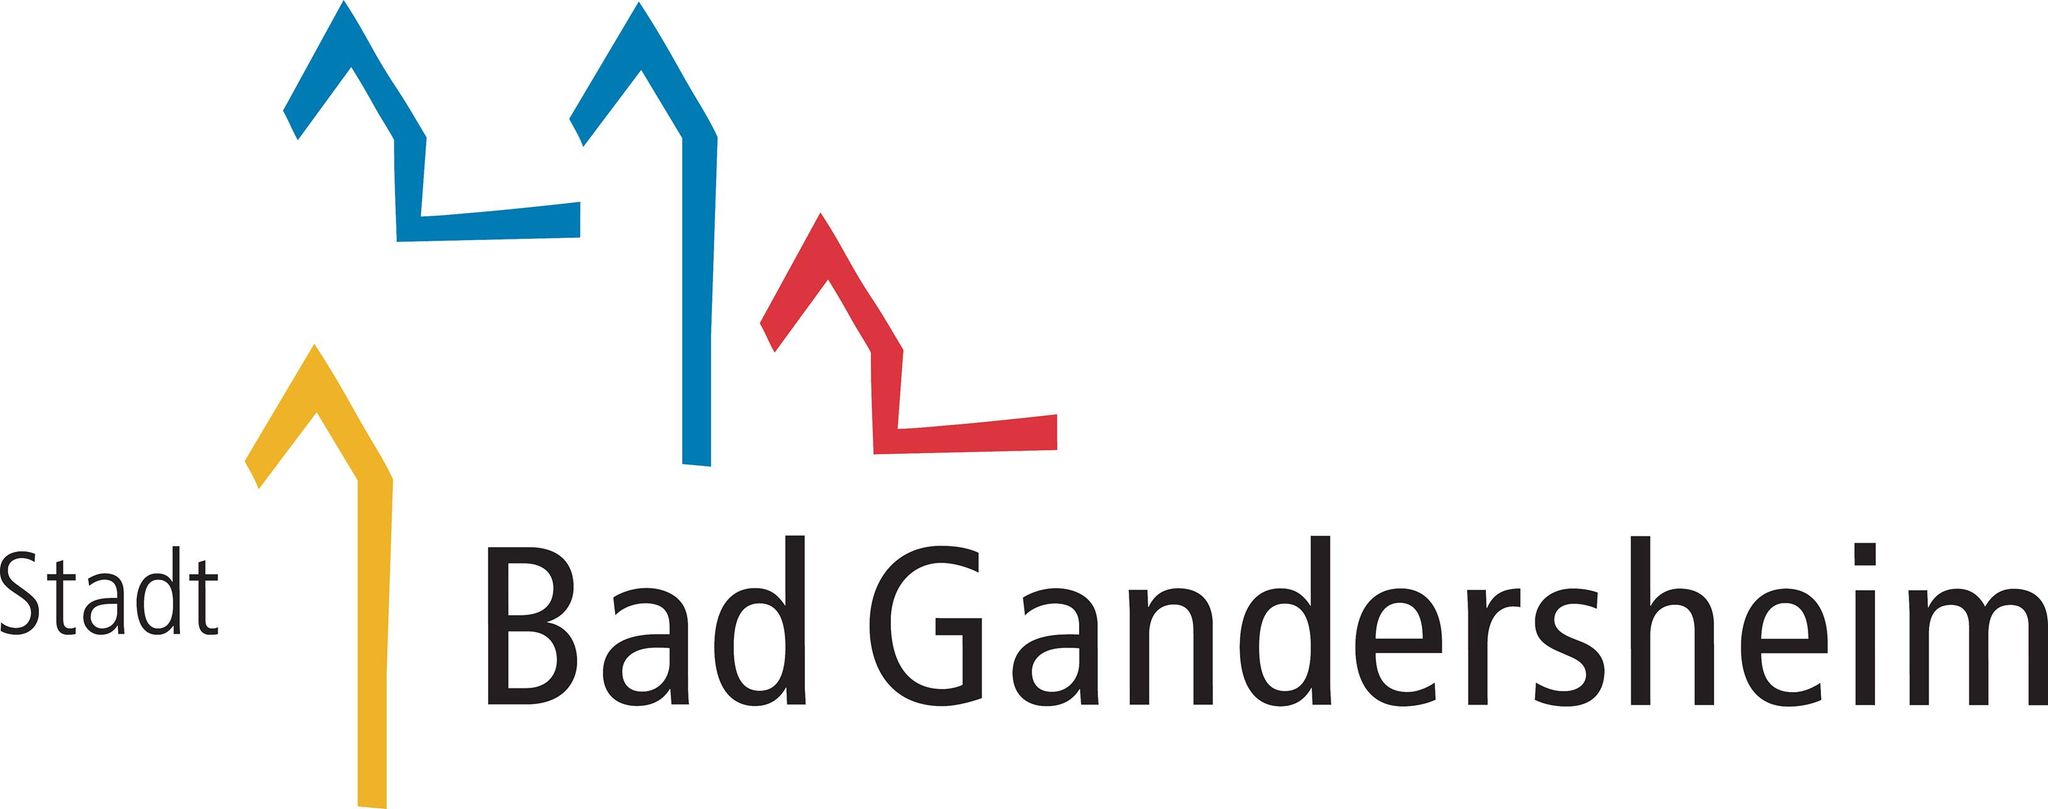 Bad Gandersheim City Logo